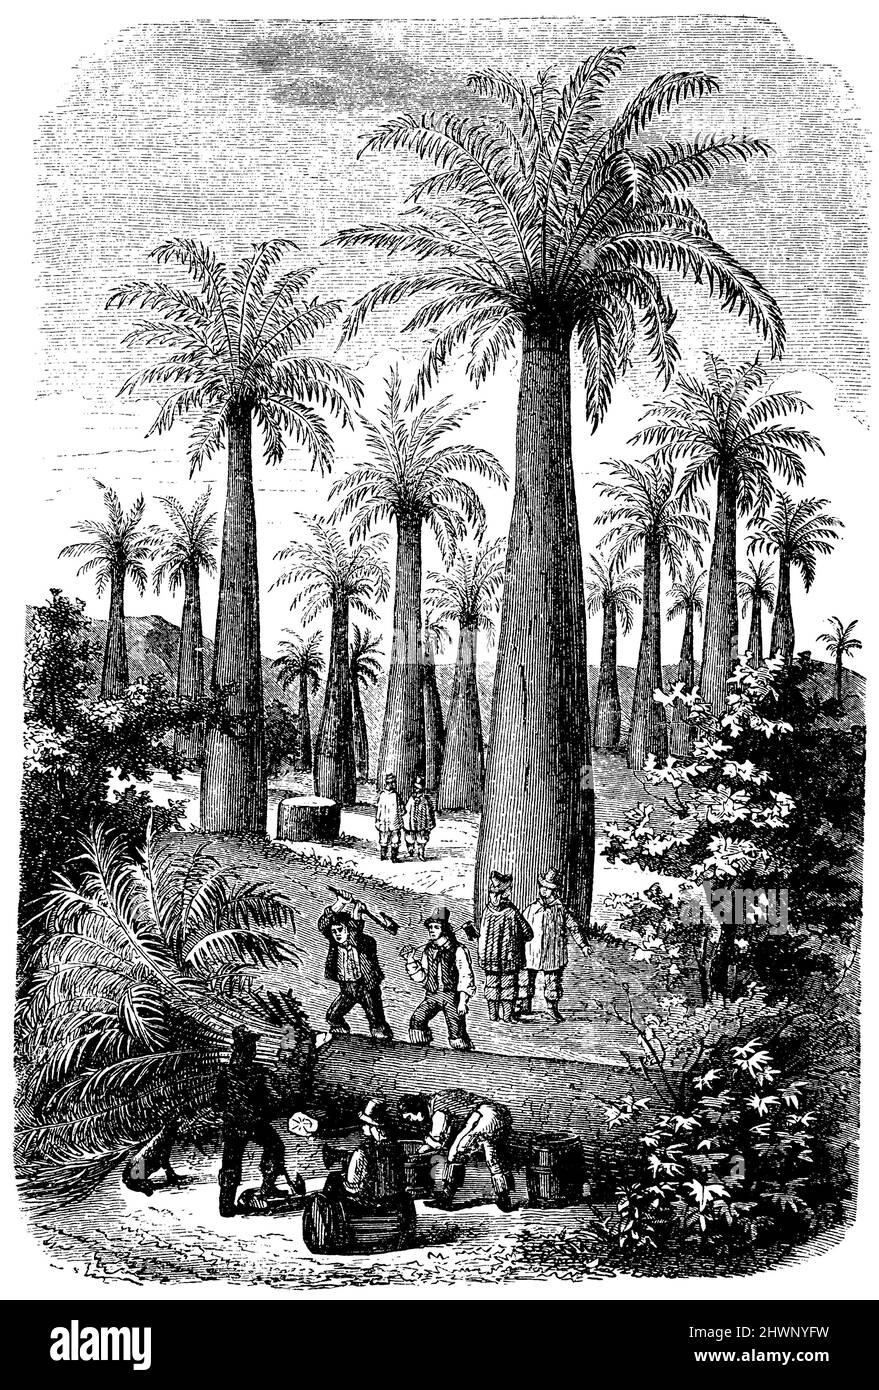 Jubaea spectabilis - Chilean sugar palm tree, ,  (encyclopedia, 1893), Jubaea spectabilis - Chilenische Zuckerpalme, Jubaea spectabilis - Palmier à sucre du Chili Stock Photo